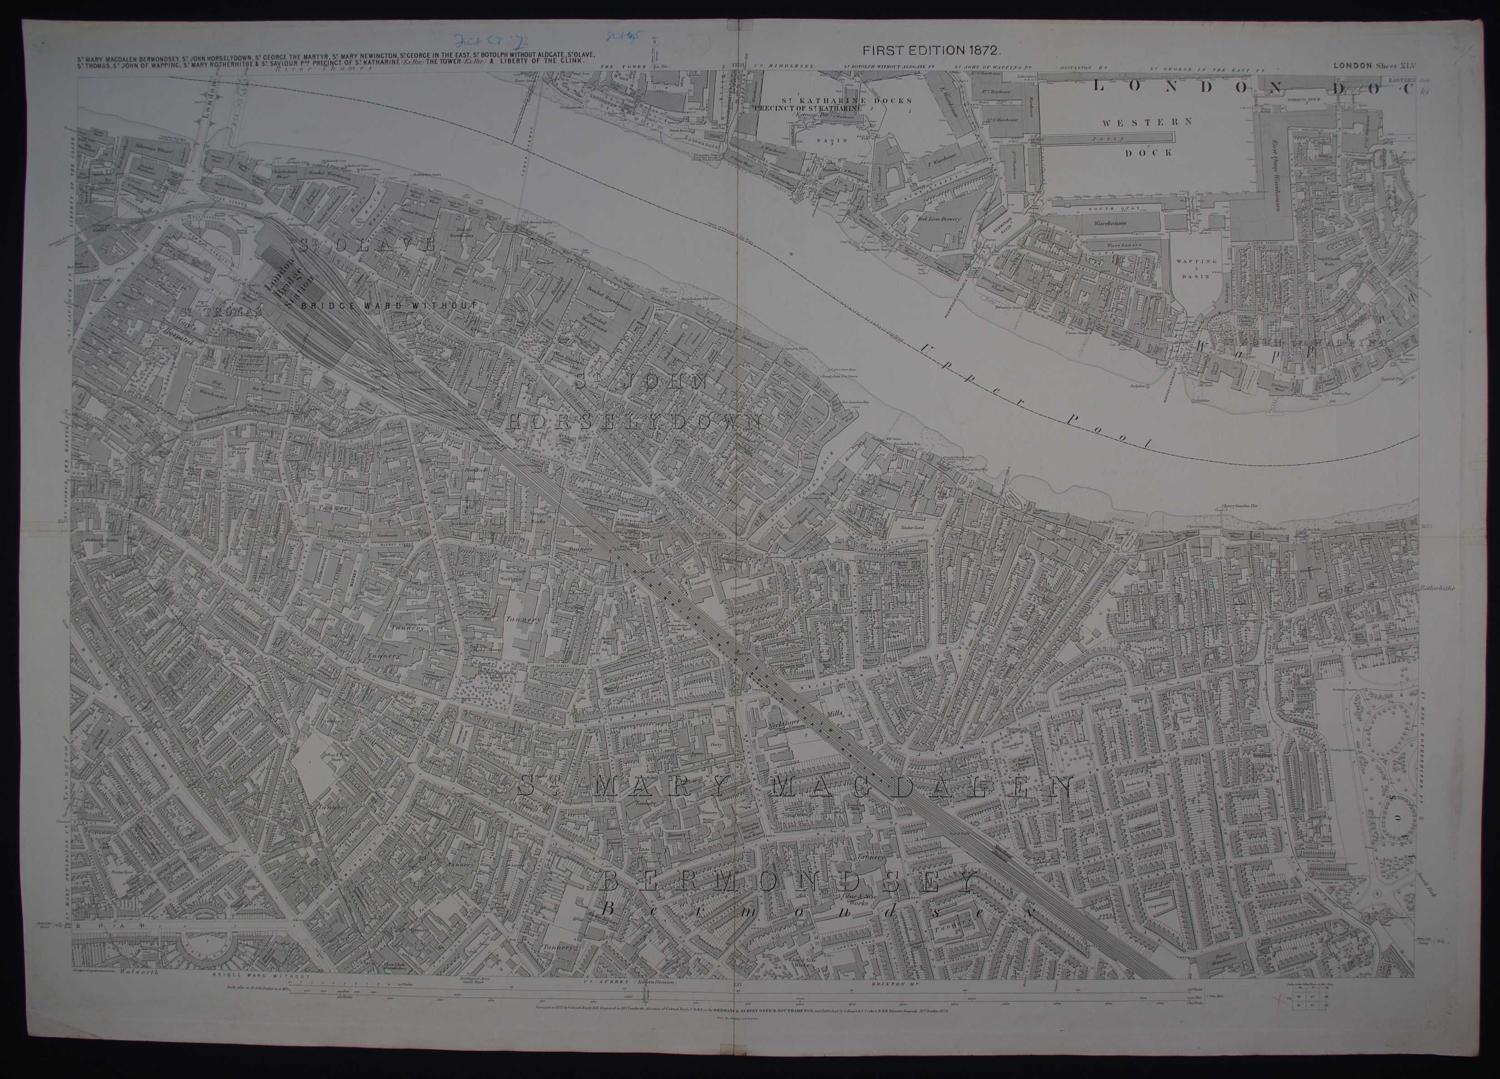 London. Sheet XLV FIRST EDITION 1872 by Ordnance Survey